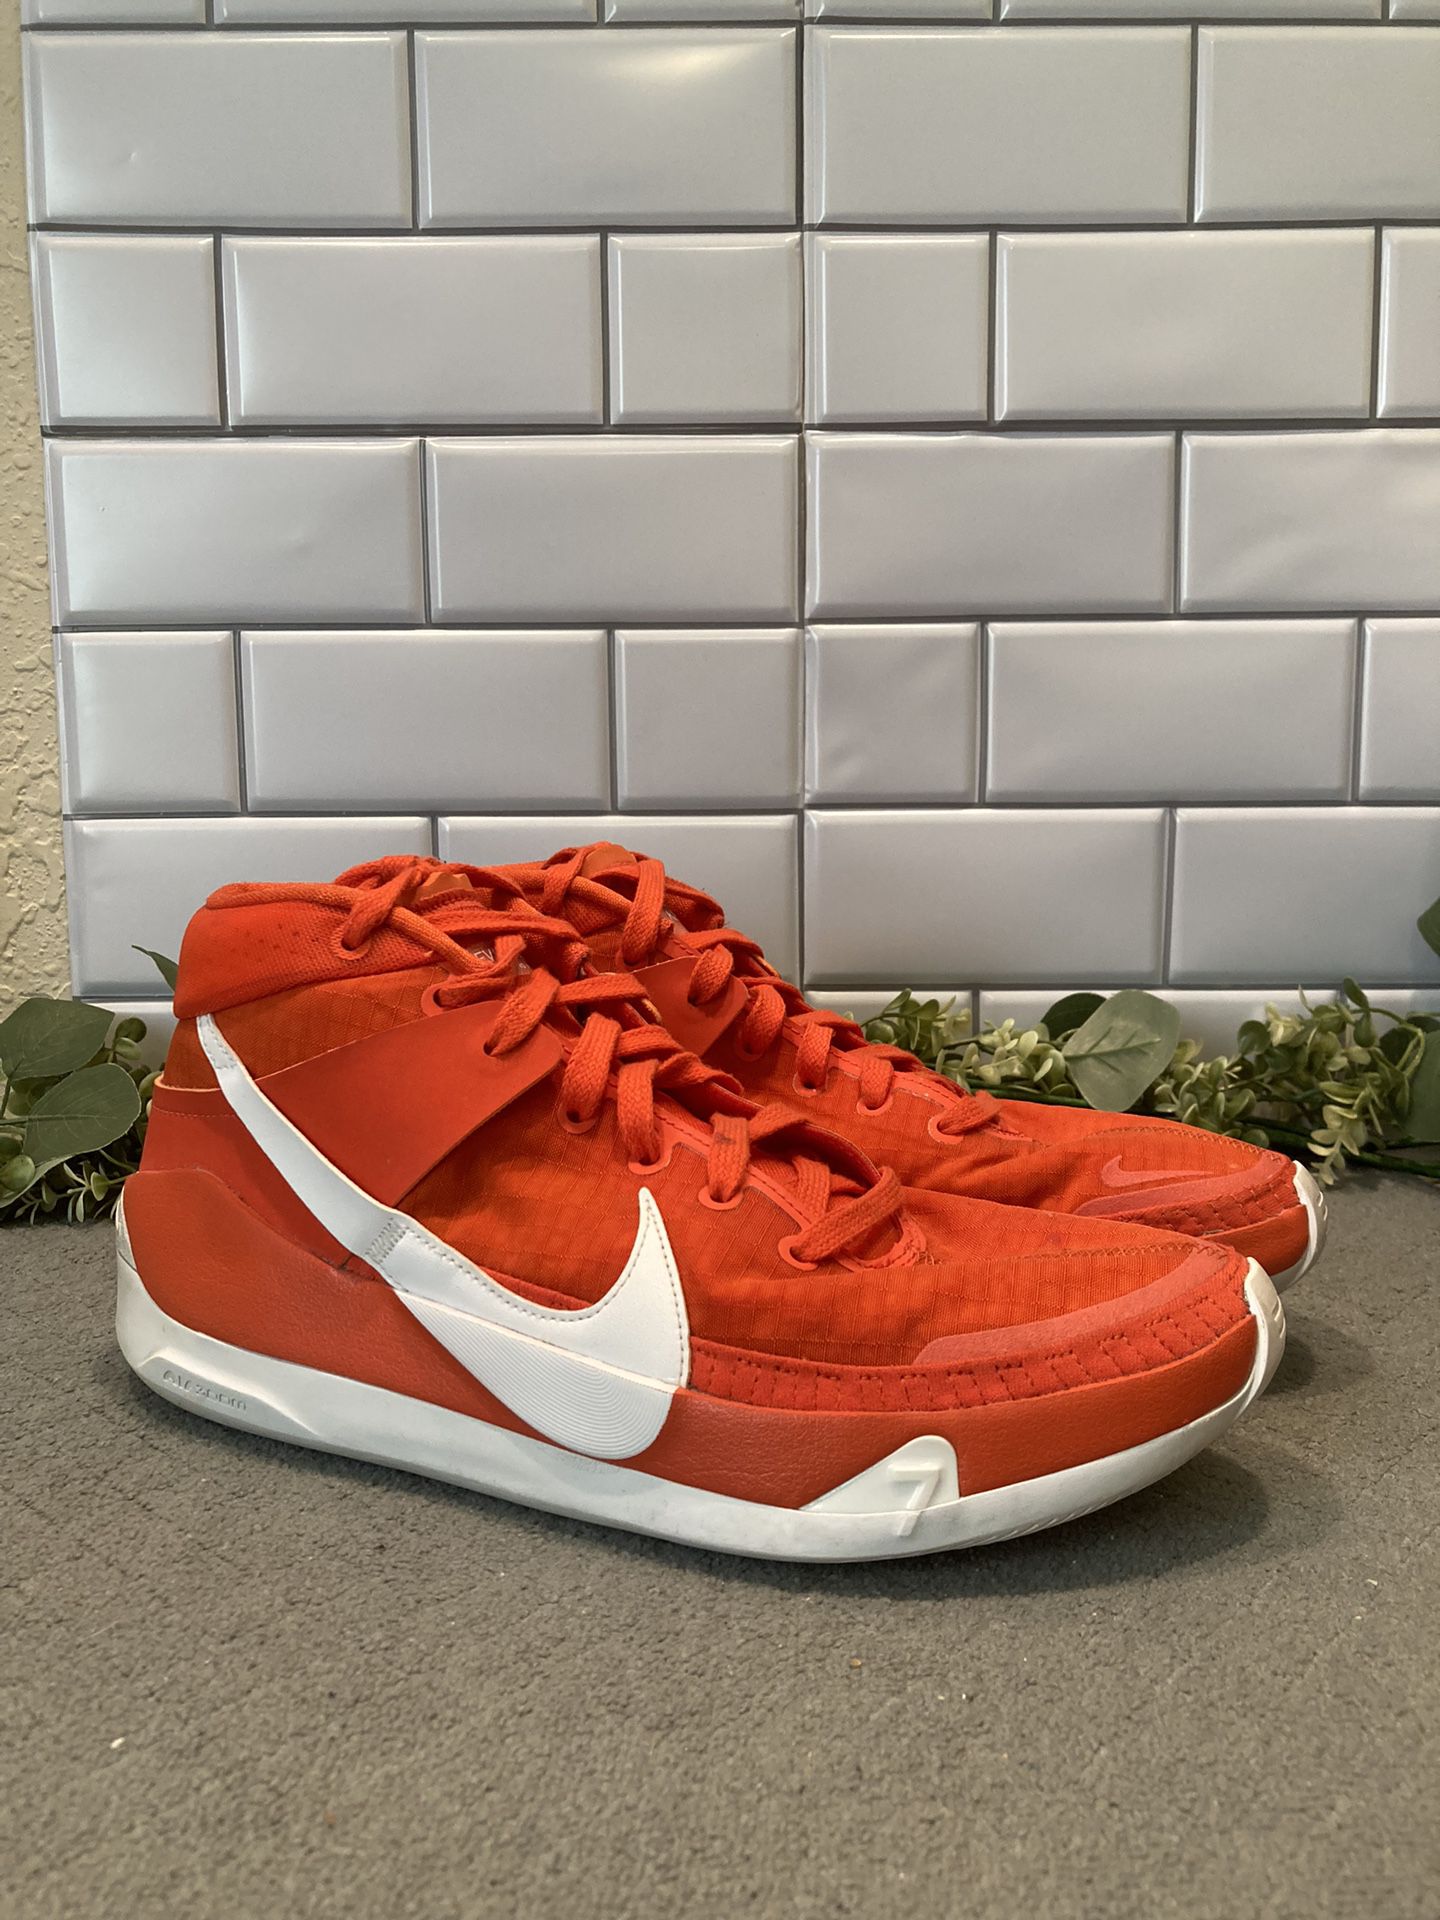 Nike KD 13 TB “Team Orange” Basketball Shoes Size 11 Men’s